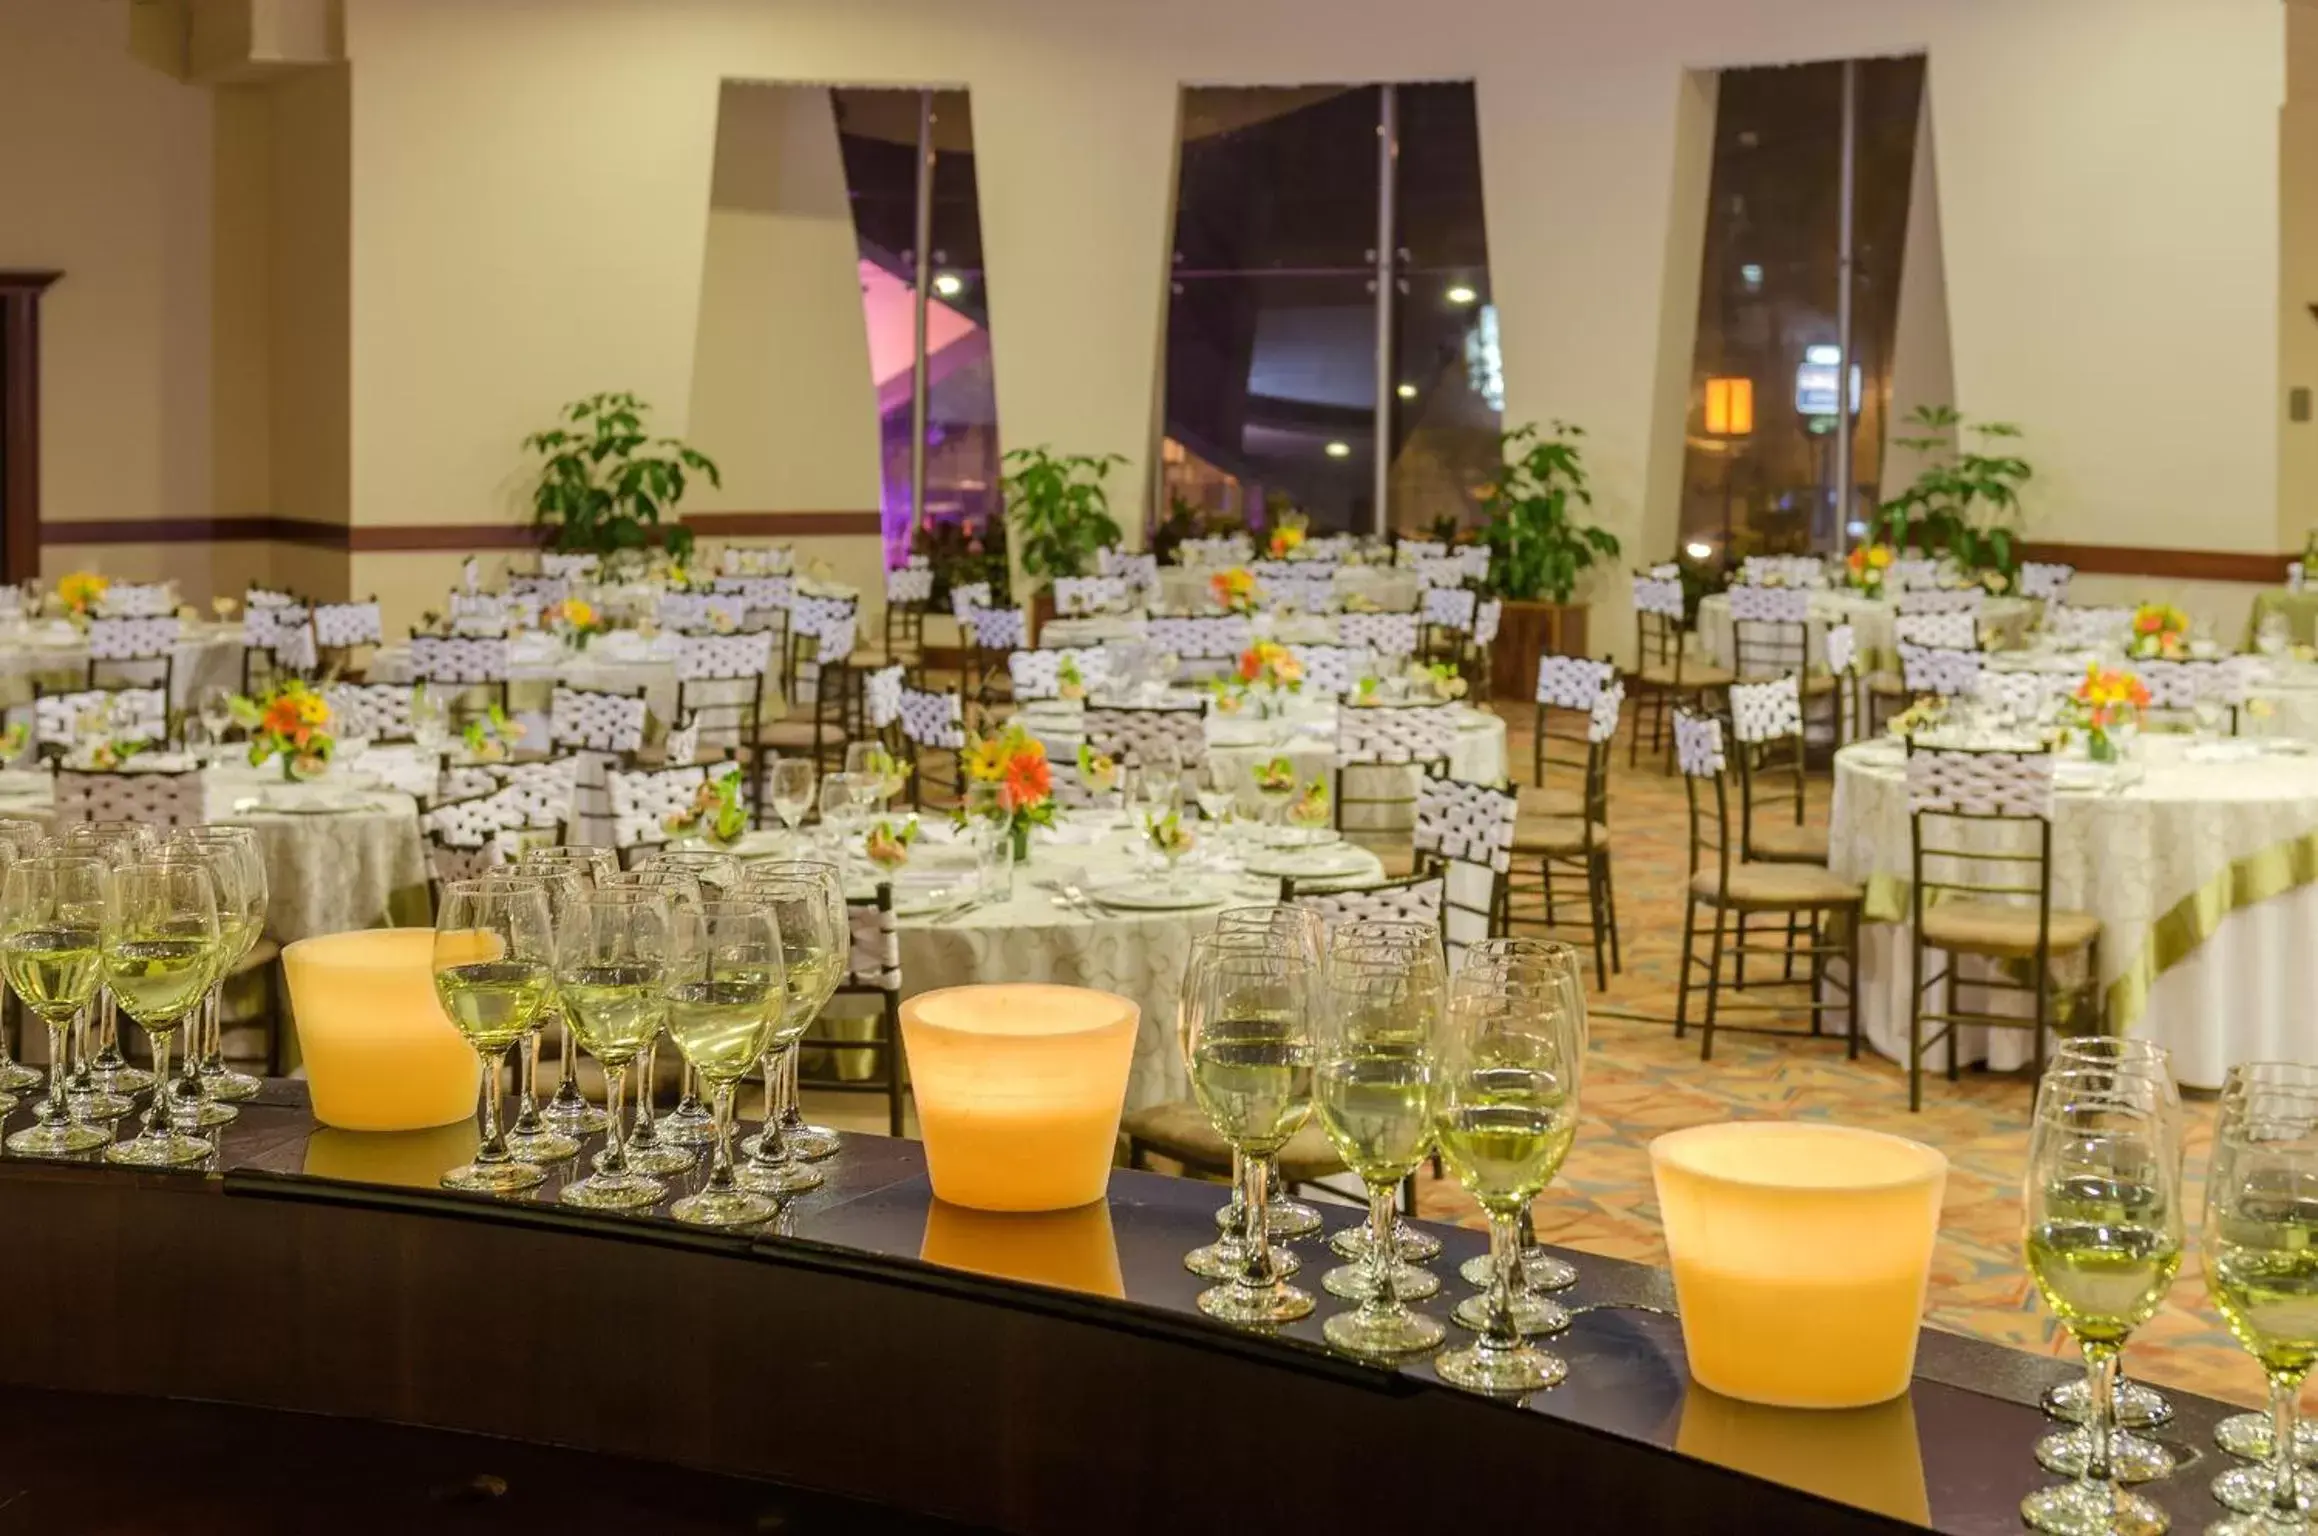 Banquet/Function facilities, Banquet Facilities in Hotel Quito